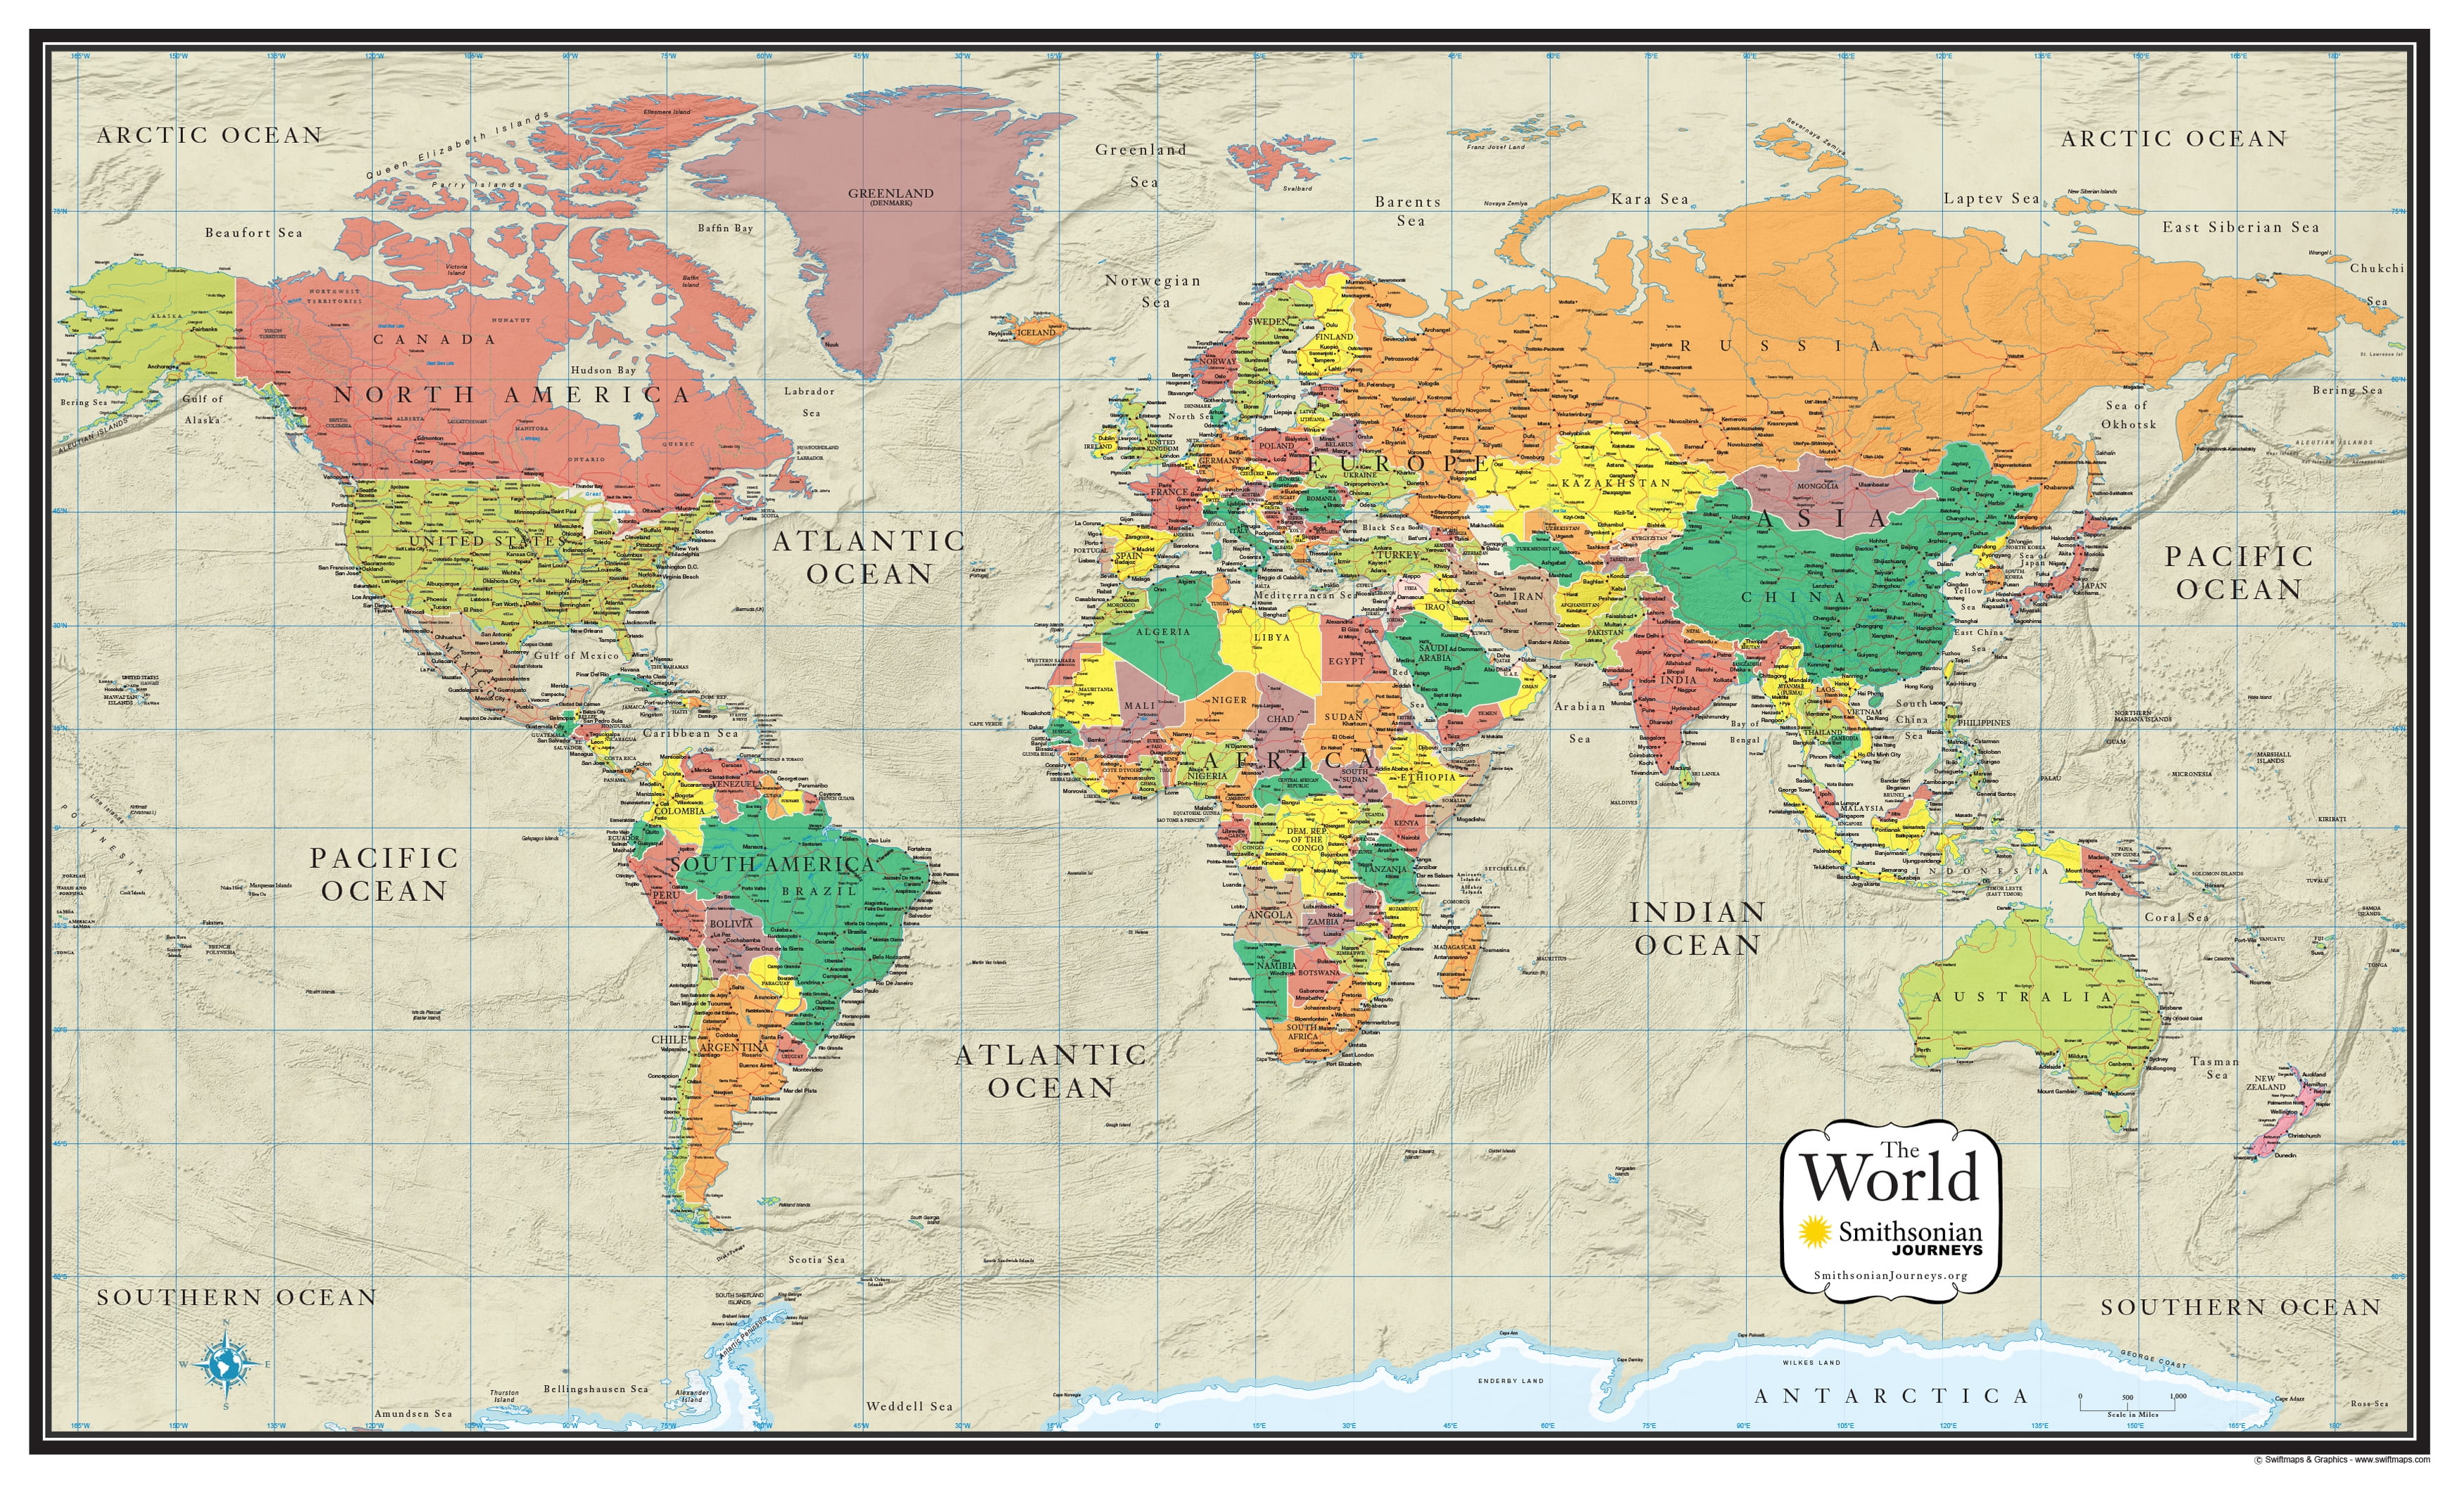 Leonex on X: Mini earth map World size: 3000x2000 The programs I